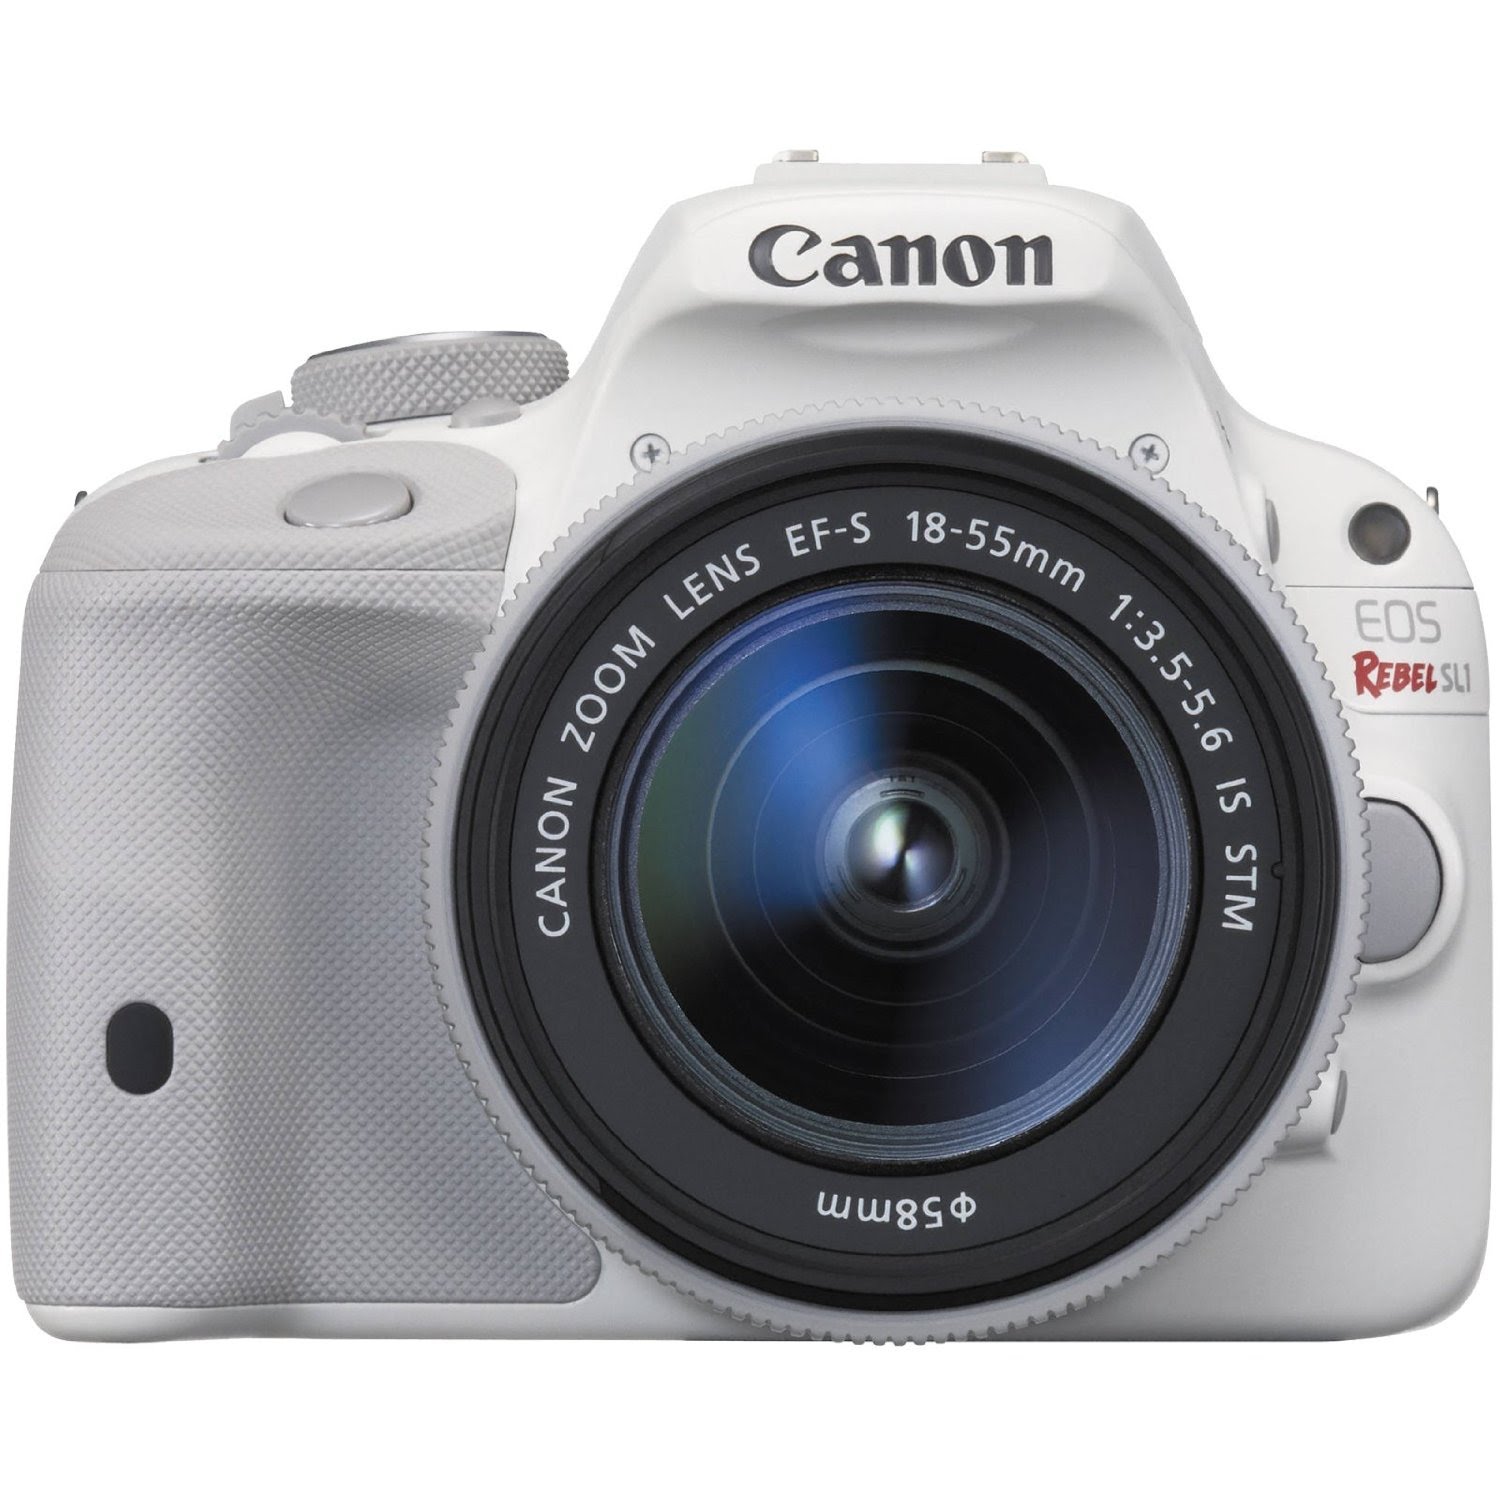 The Best 5 Canon Digital SLR Camera 2015